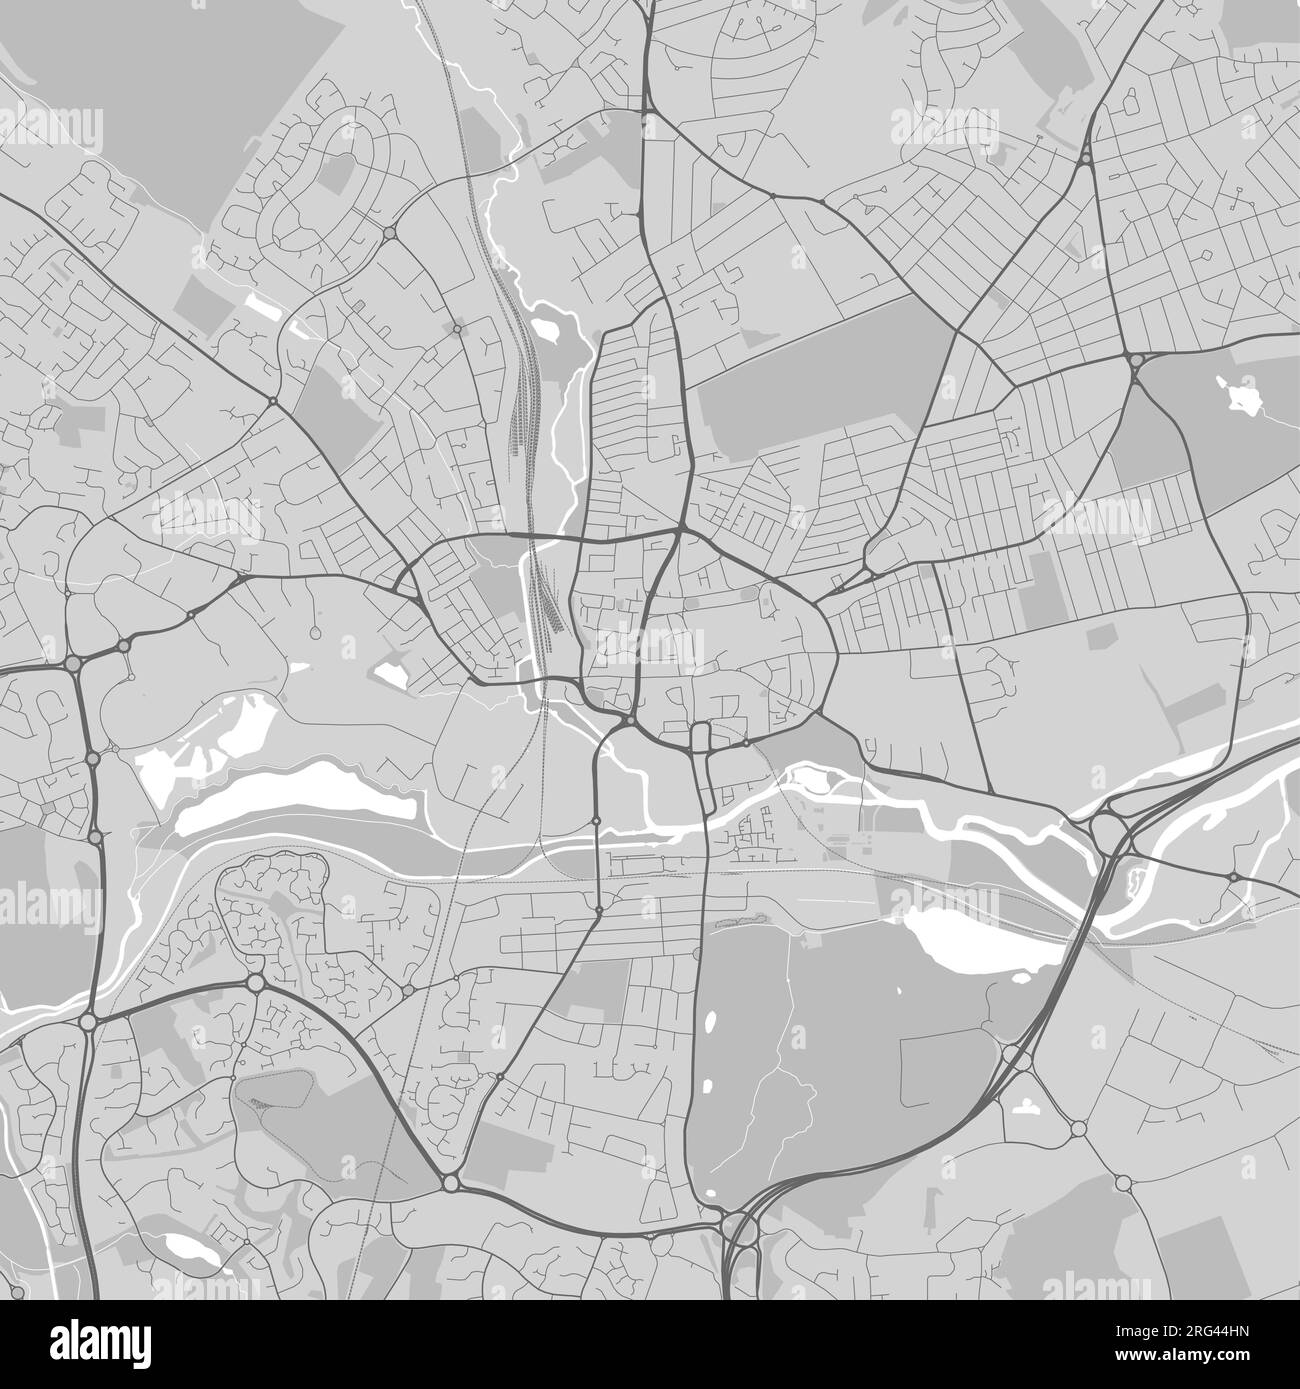 Black and white map of Northampton, England Stock Vector